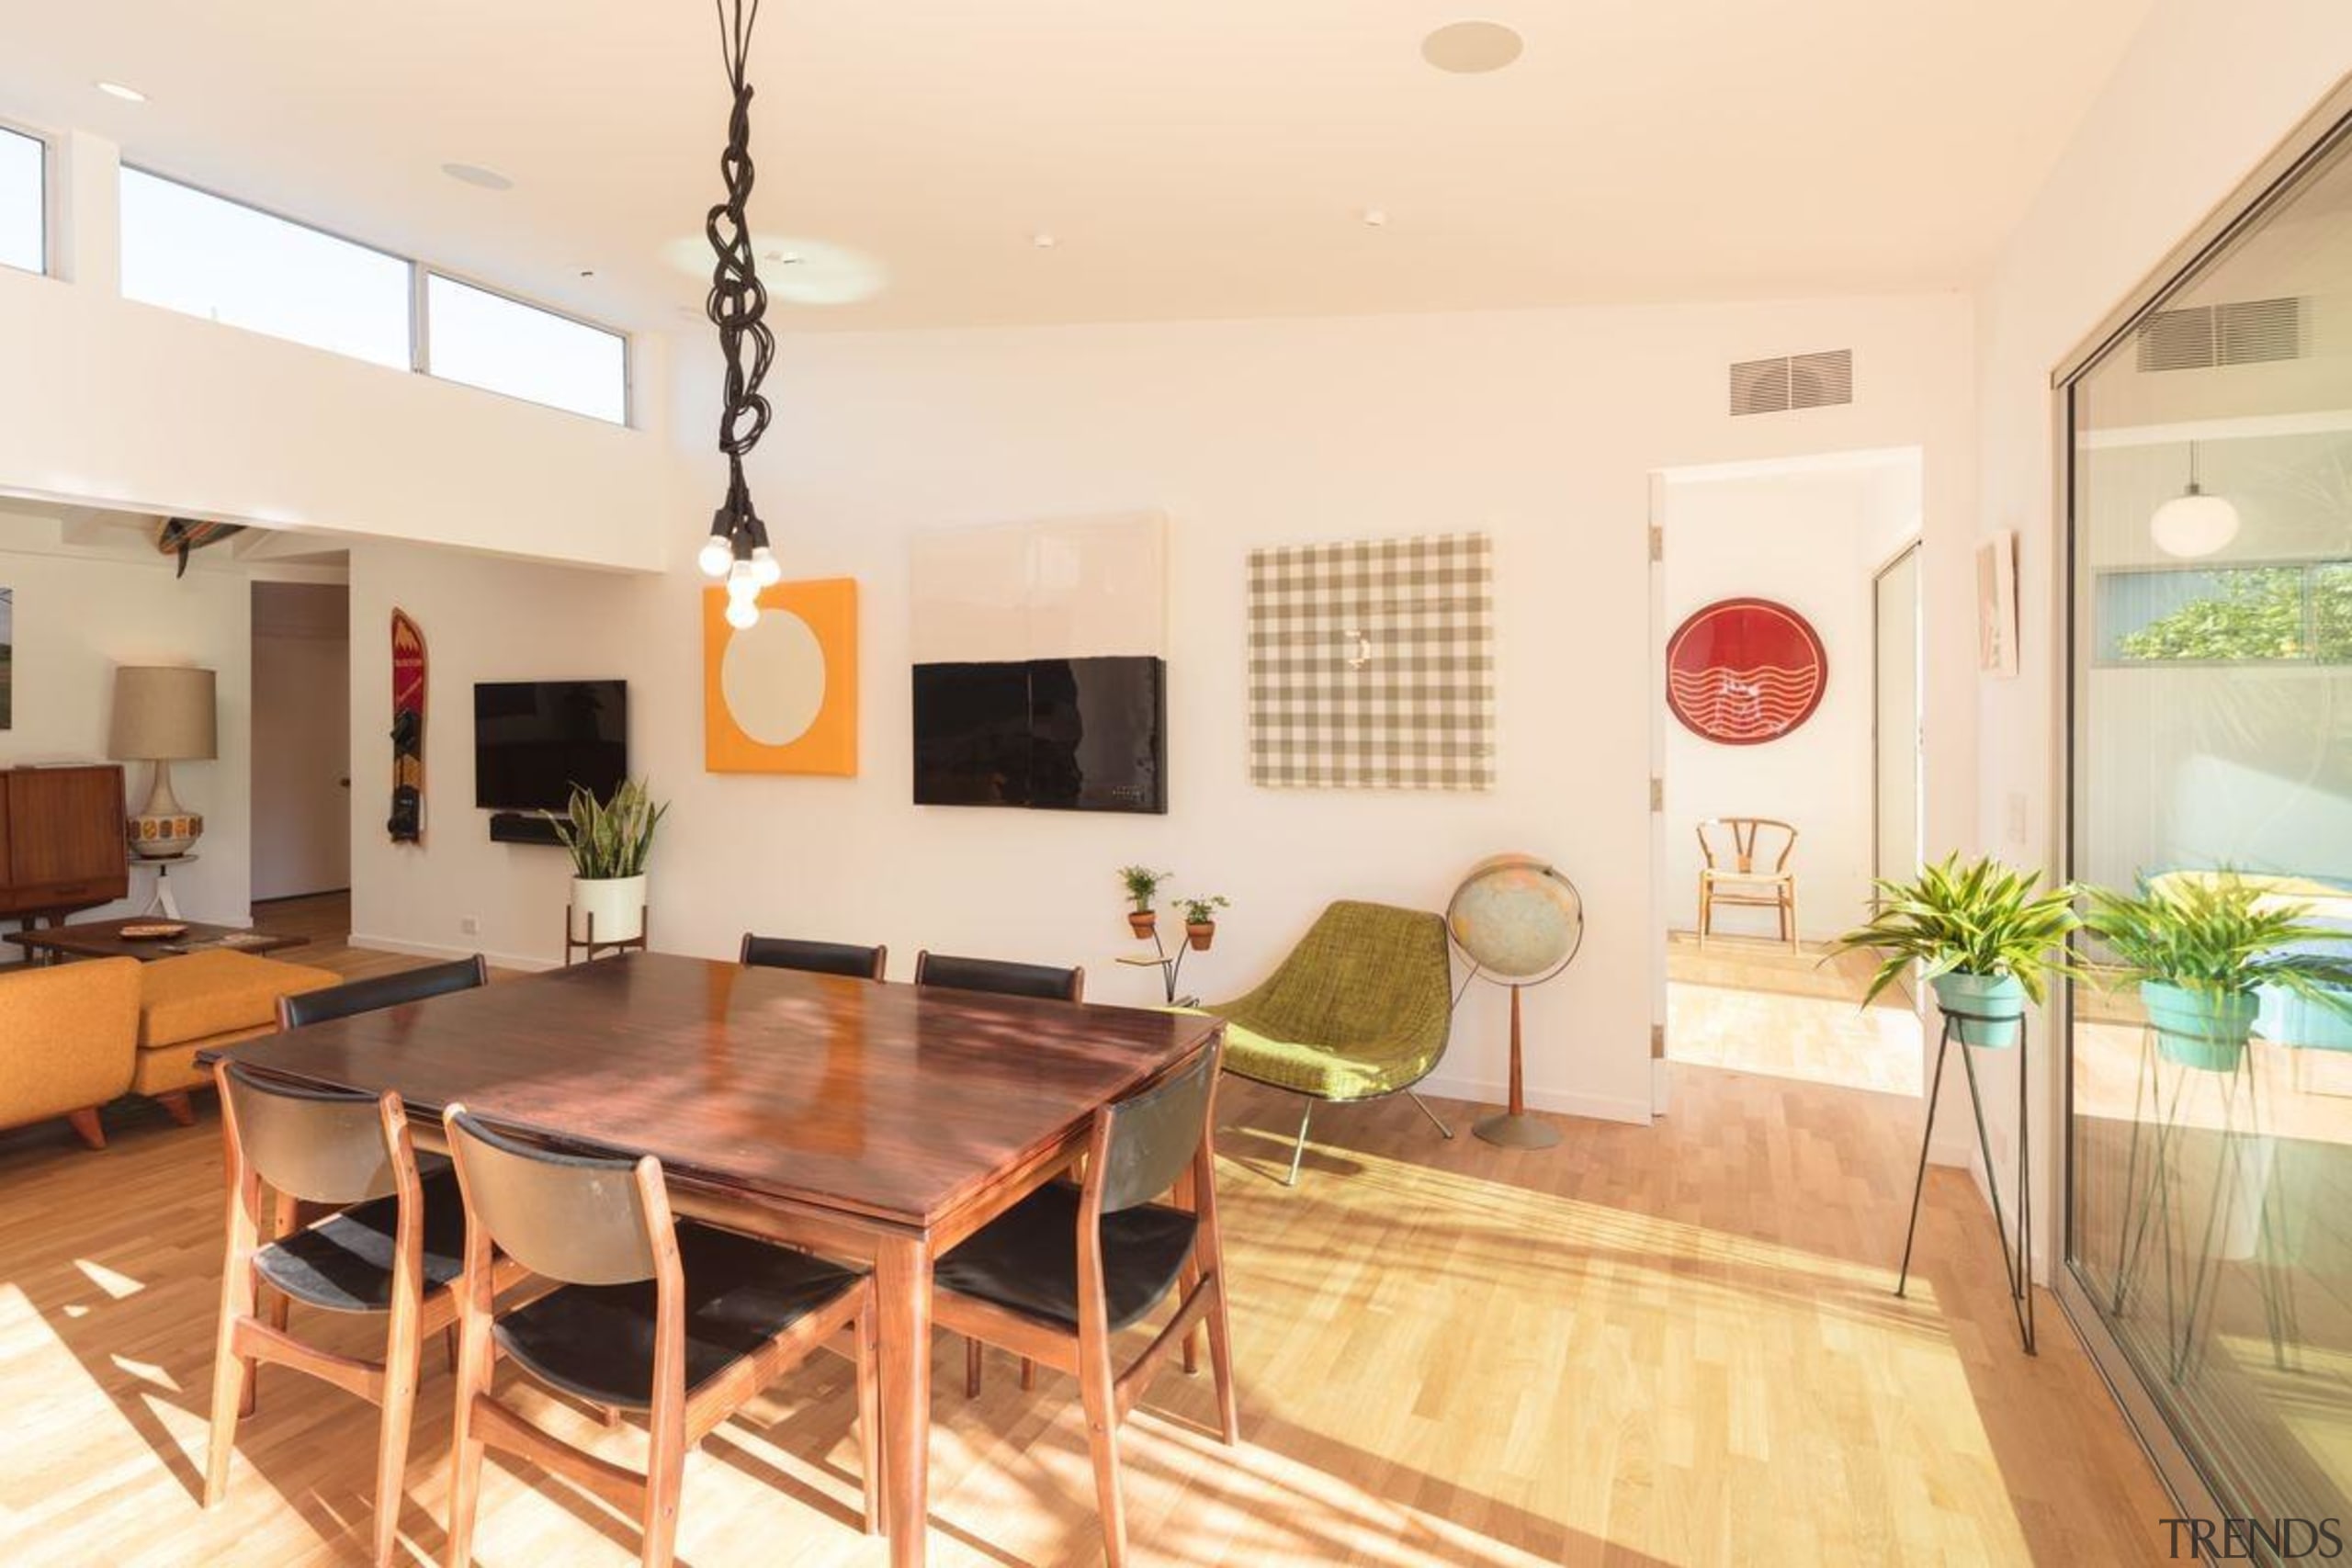 Architect: Surfside ProjectsPhotography by Darren Bradley interior design, living room, property, real estate, room, table, orange